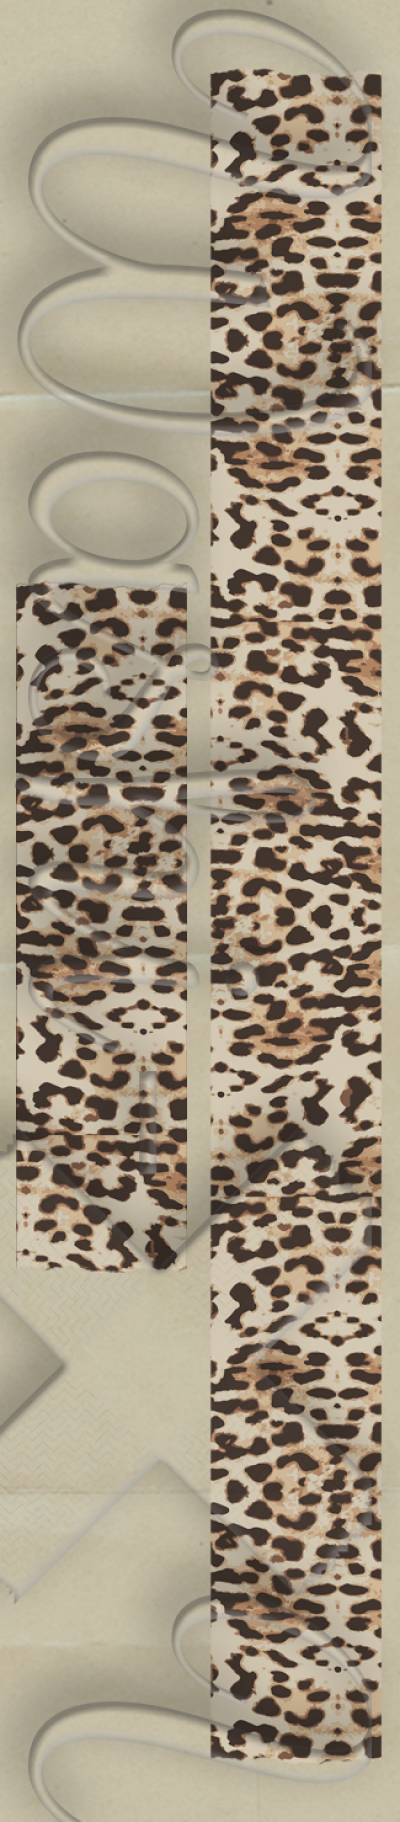 Leopard patterned washi tape